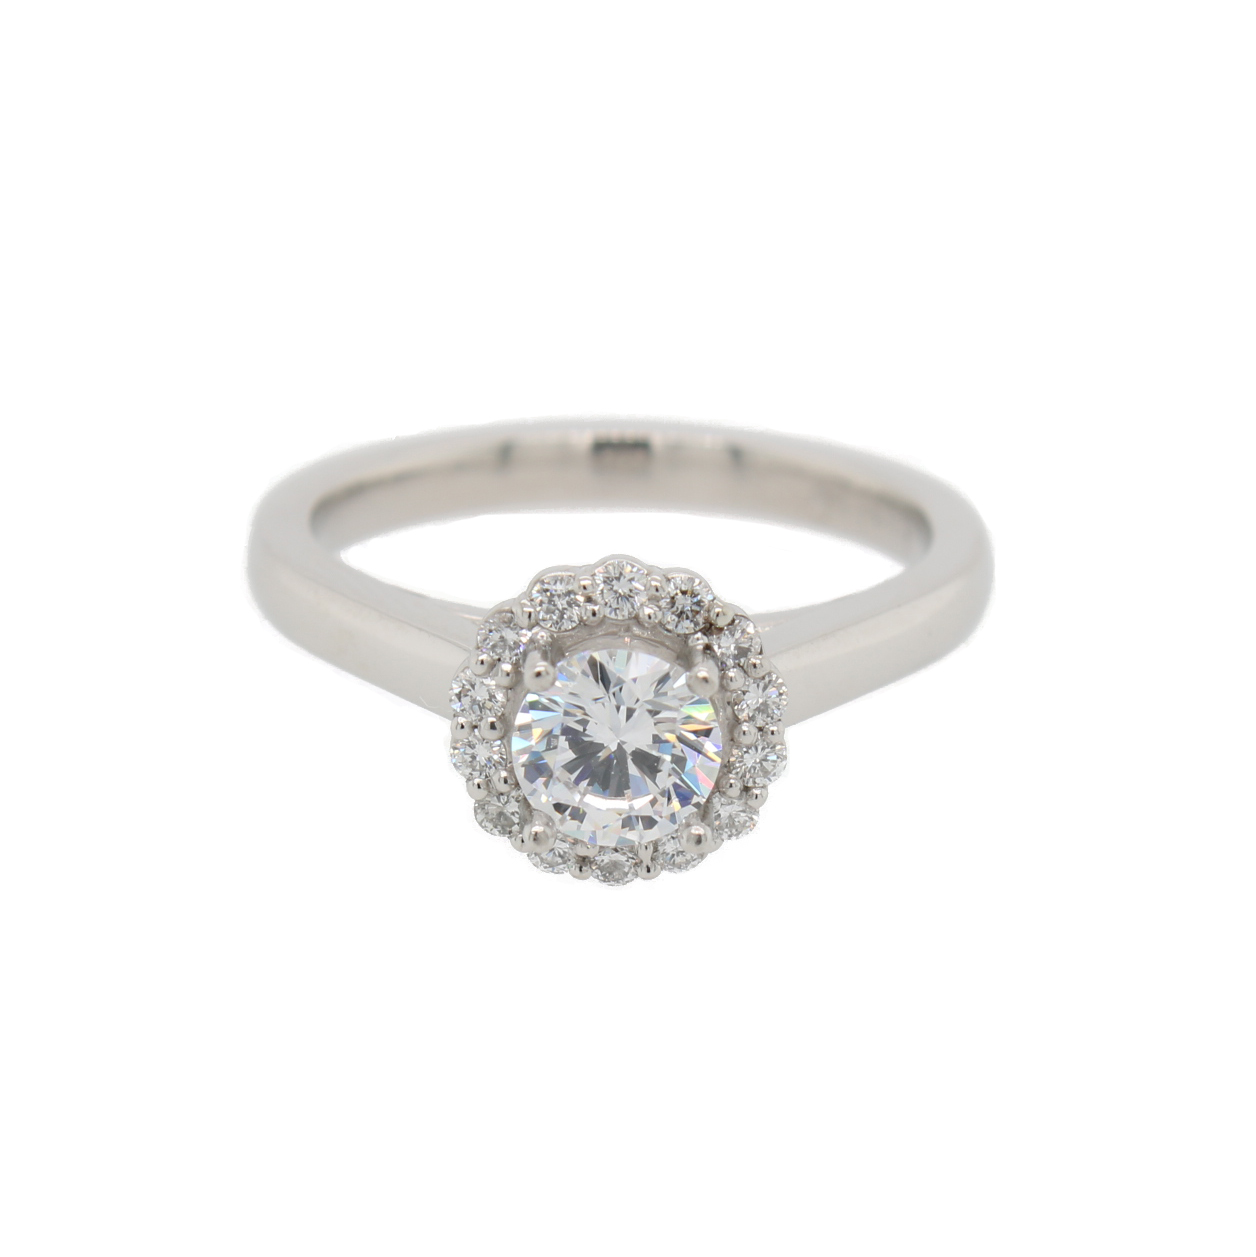 392525Round-Diamond-Halo-Engagement-Ring.jpg